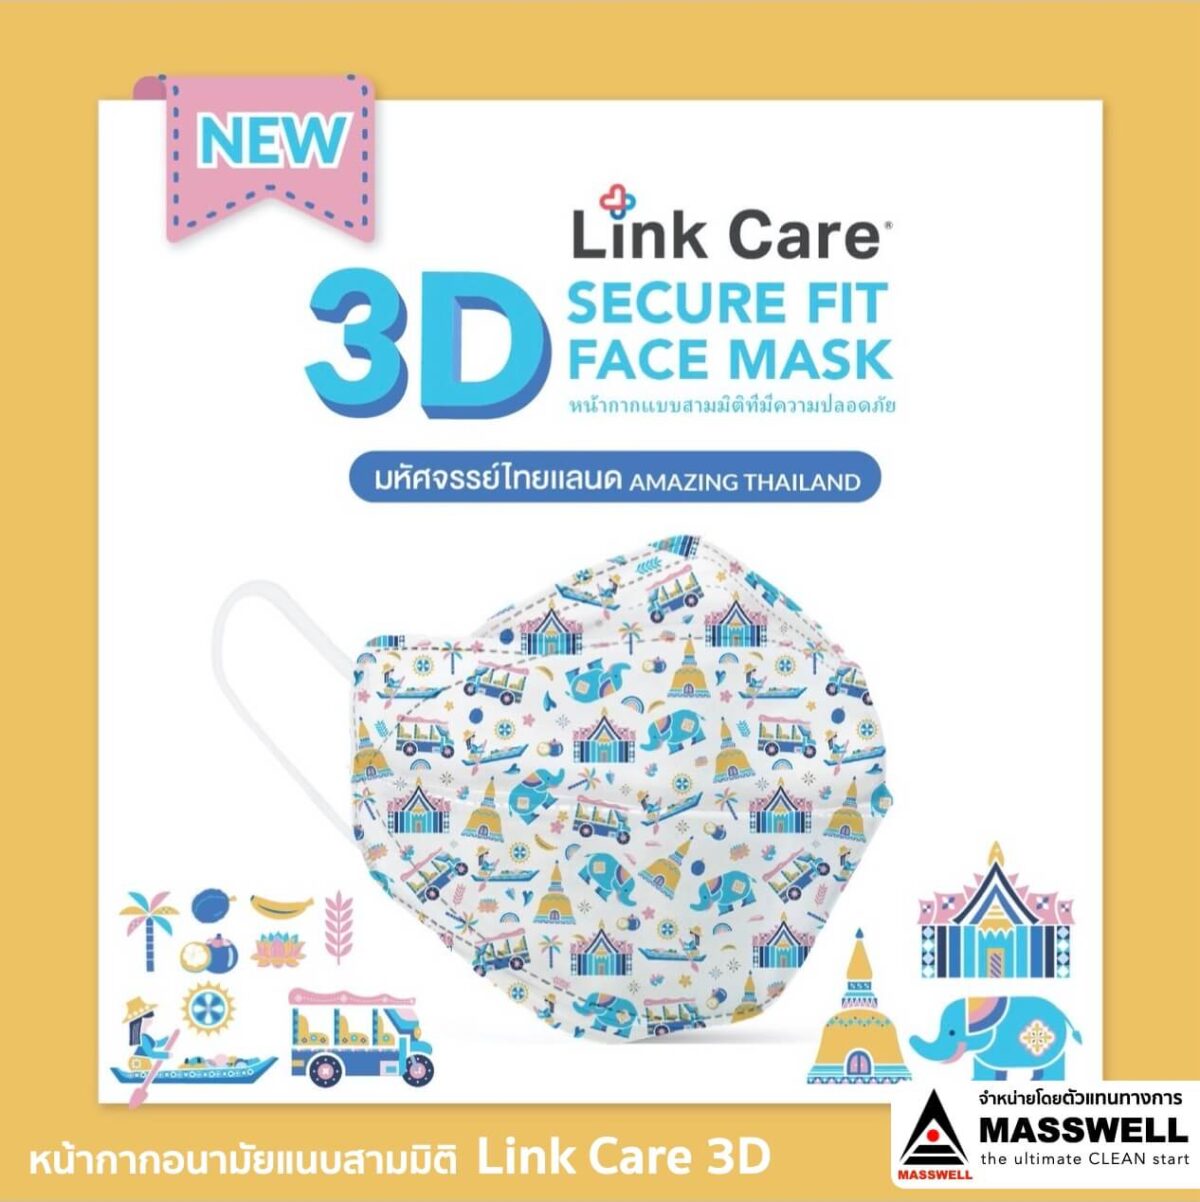 Link Care 3D หน้ากากอนามัย ผู้ใหญ่ Amazing Thailand อเมซิ่งไทยแลนด์ ประเทศไทย